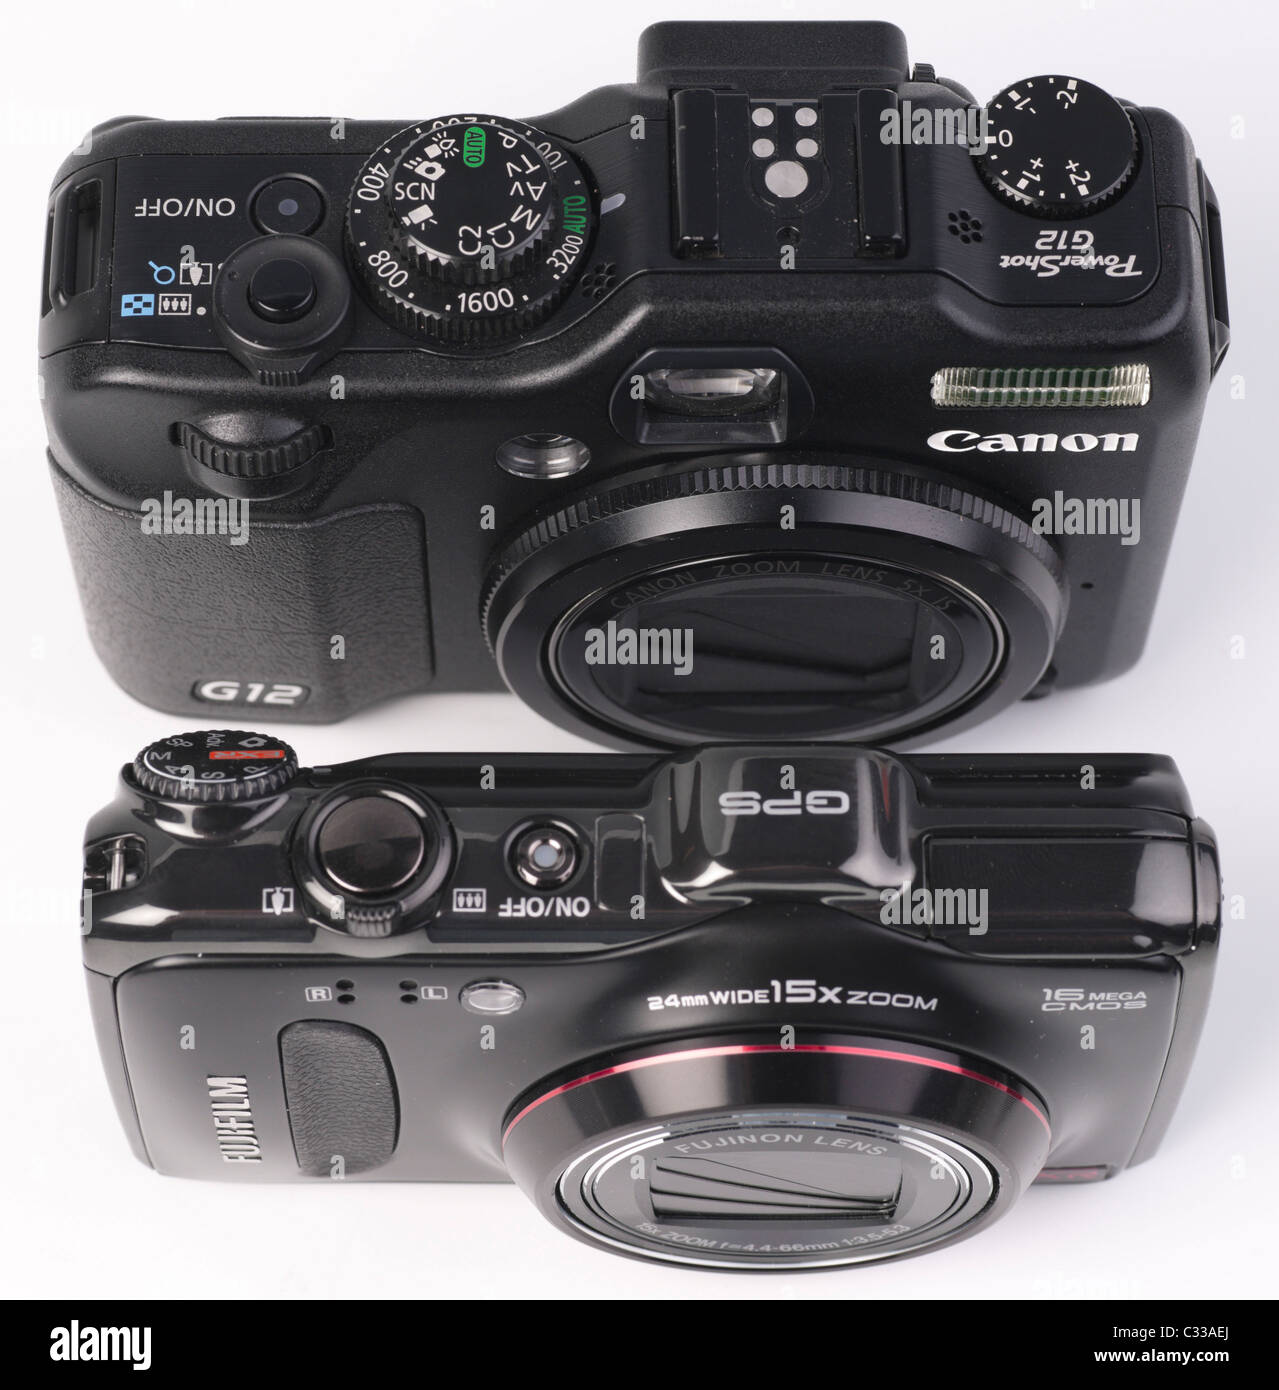 Photo equipment - Canon G12 and Fuji F550 EXR camera sizes compared Stock Photo